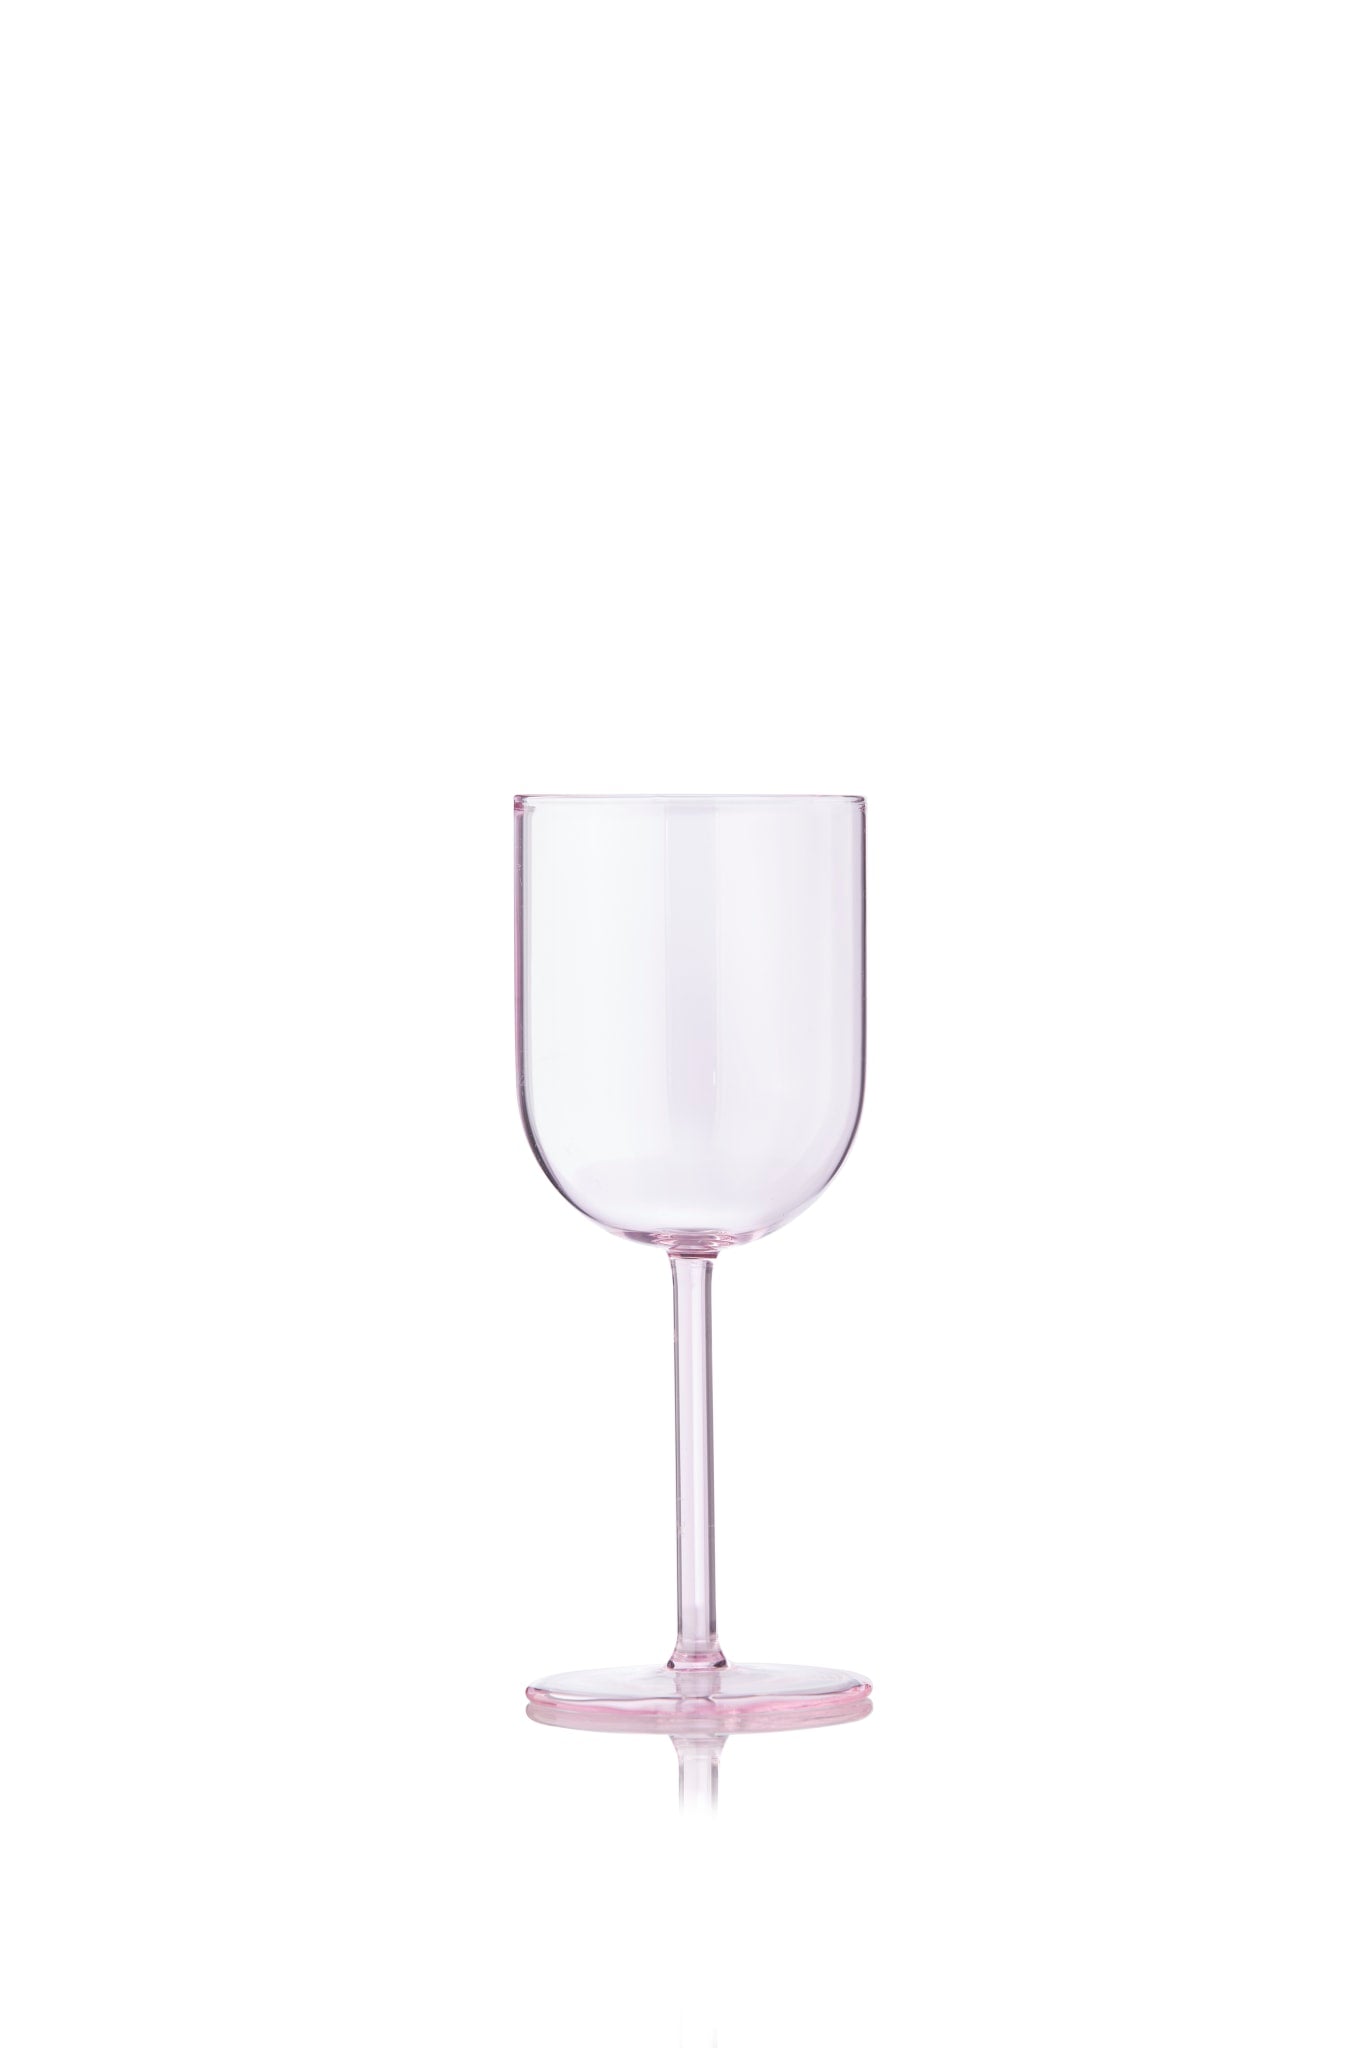 Stackable Stemmed Wine Glasses in Pink Orange, Acrylic